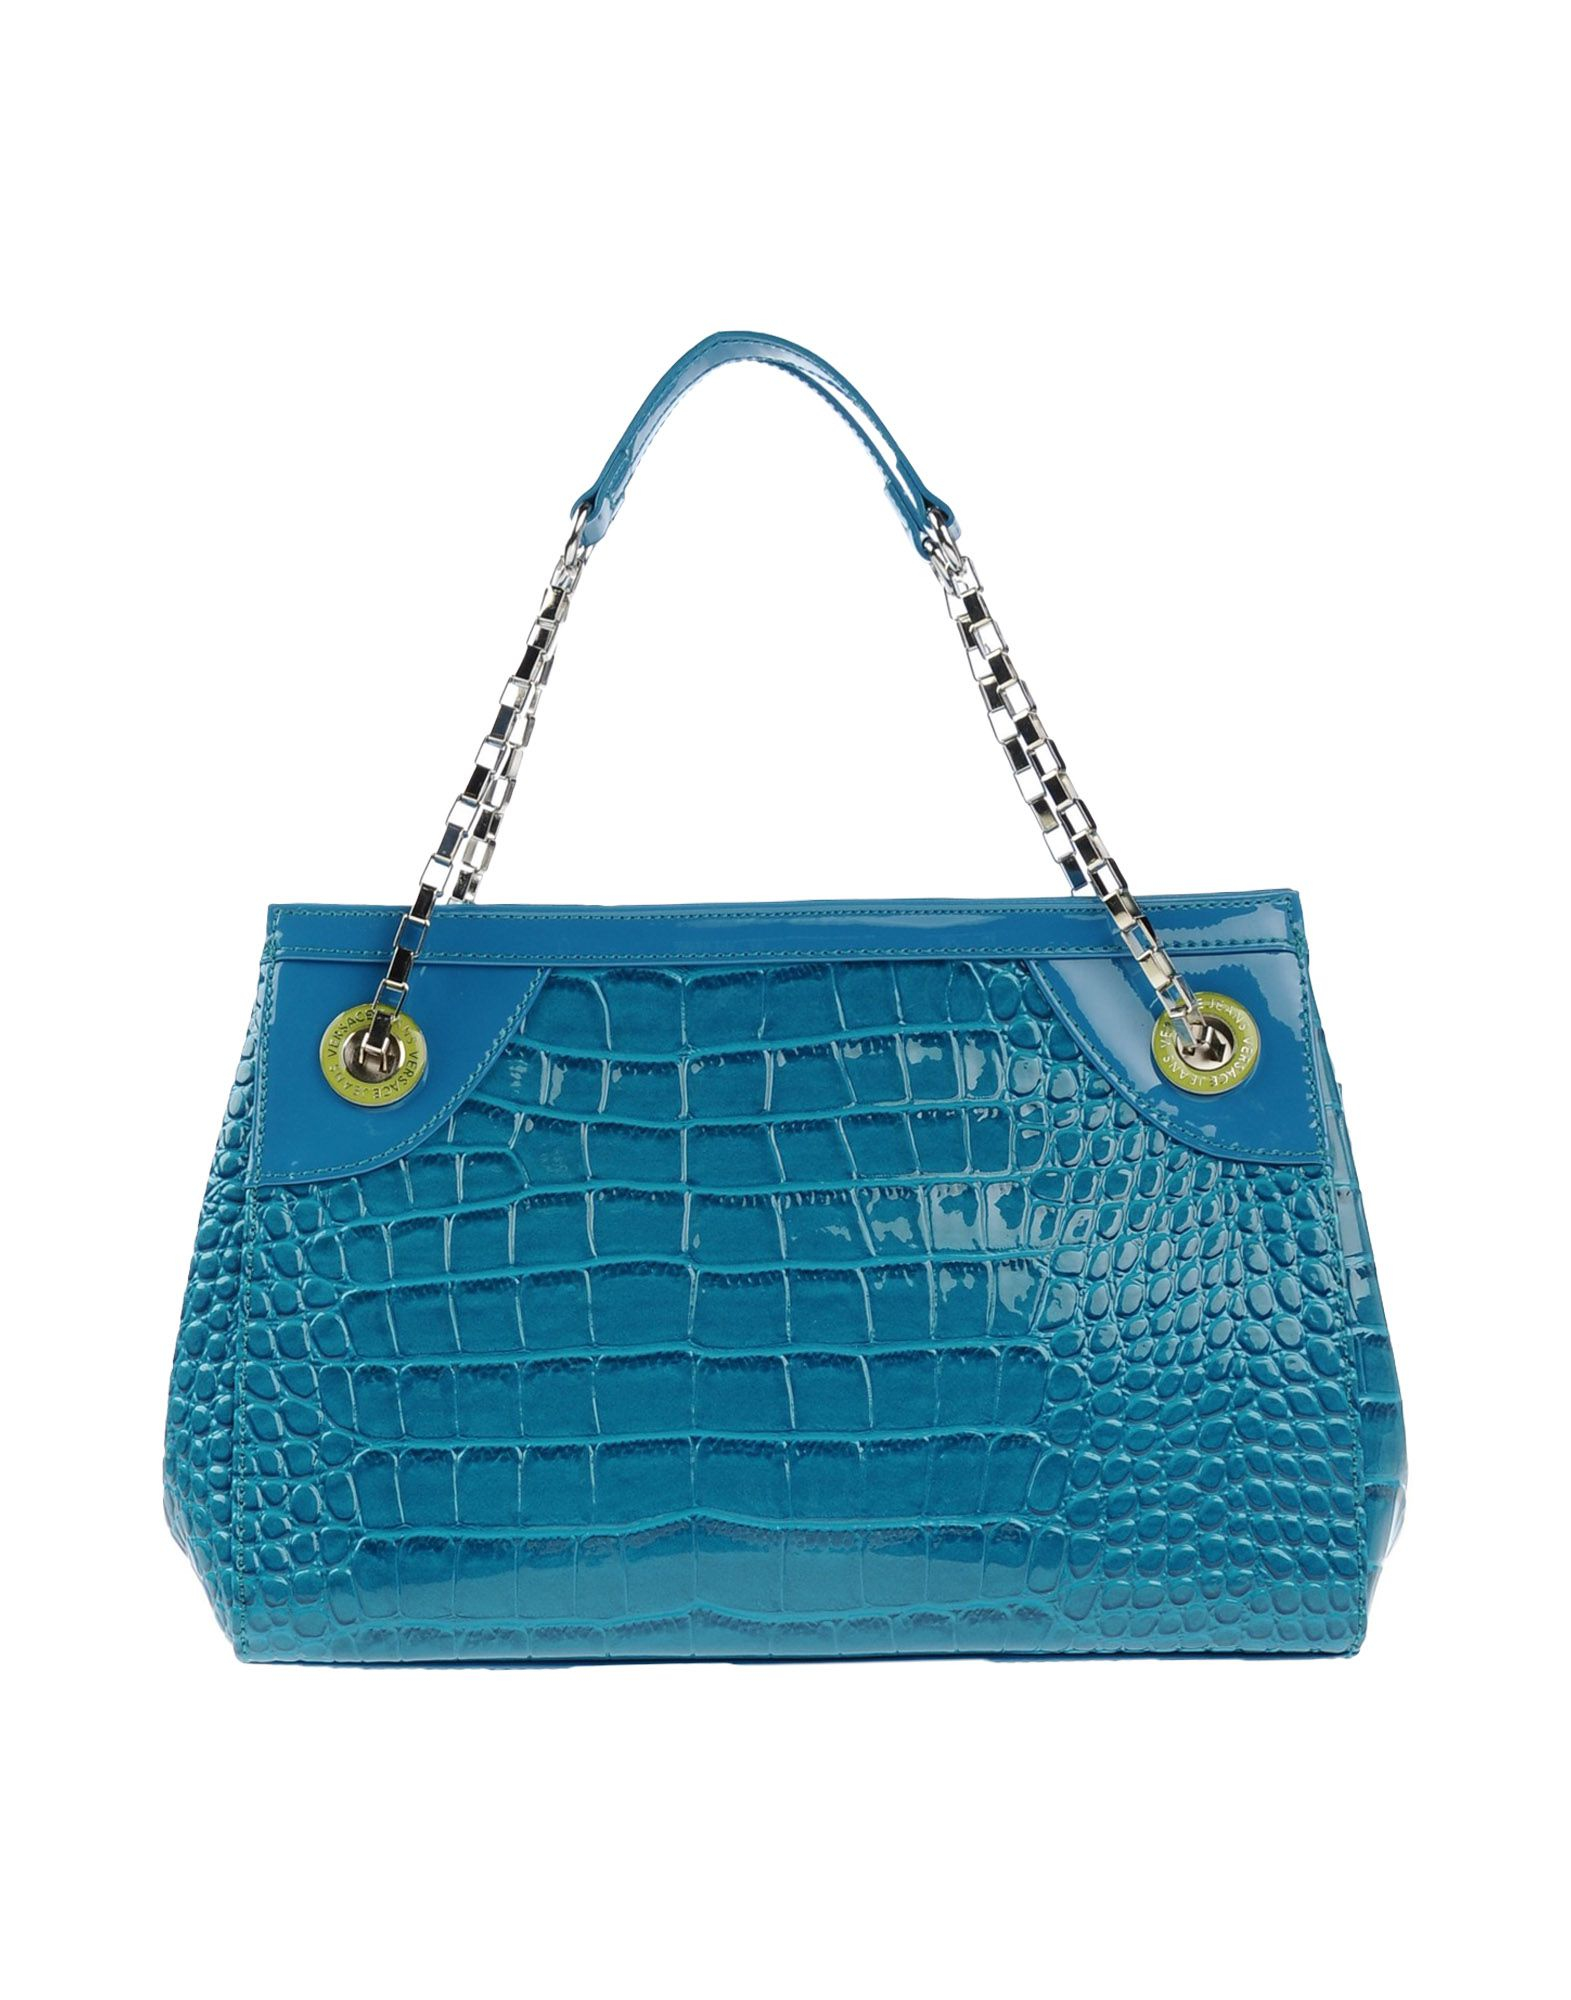 Versace jeans Handbag in Blue | Lyst